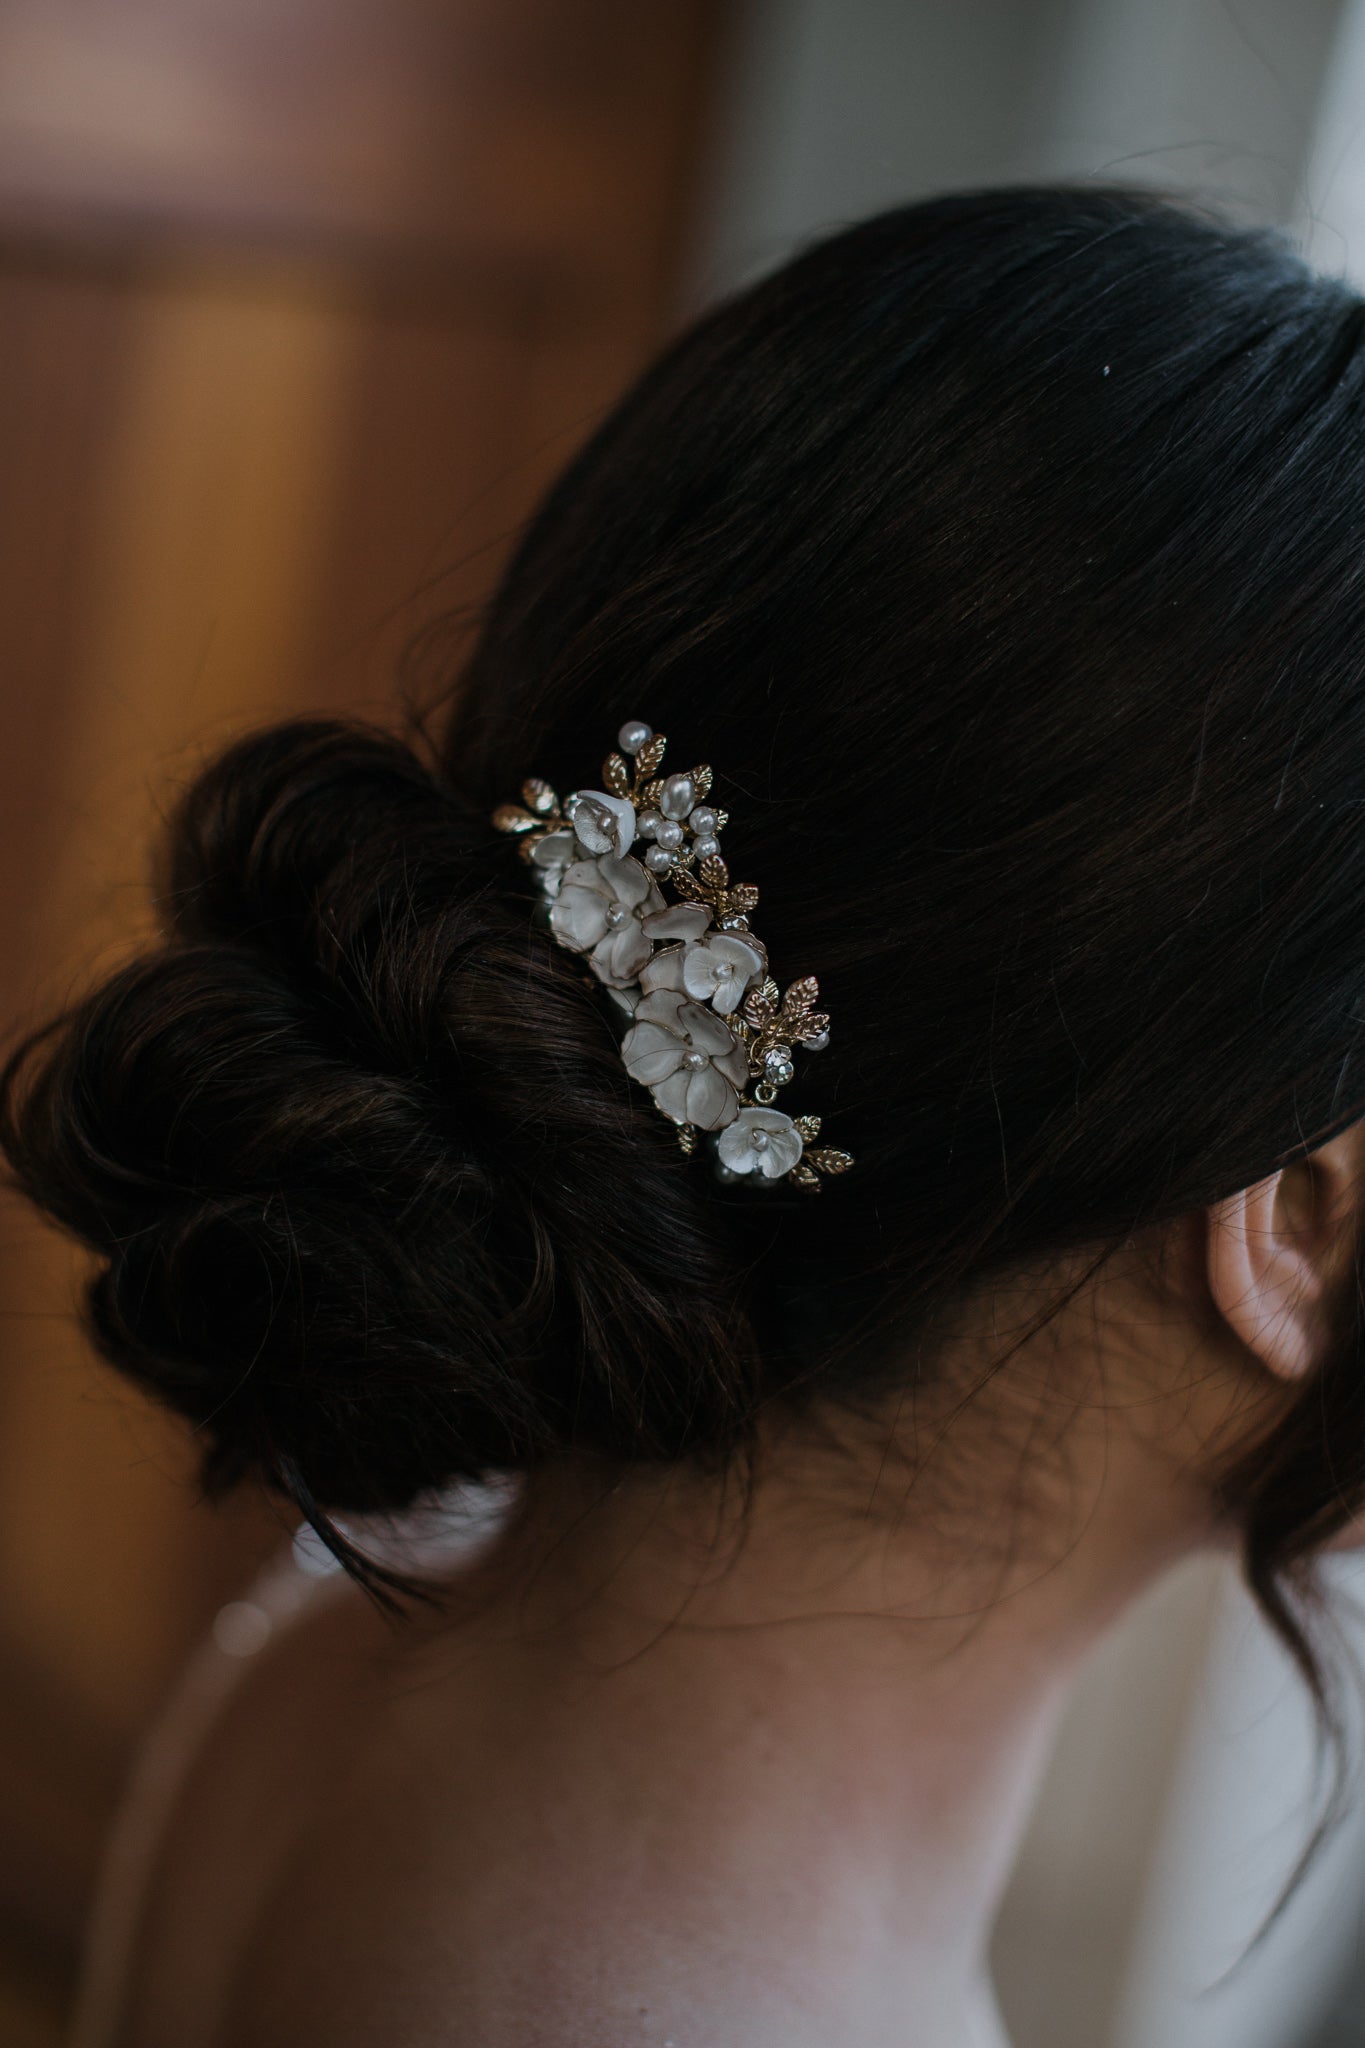 Elle - Dainty Floral Bridal Hair Comb